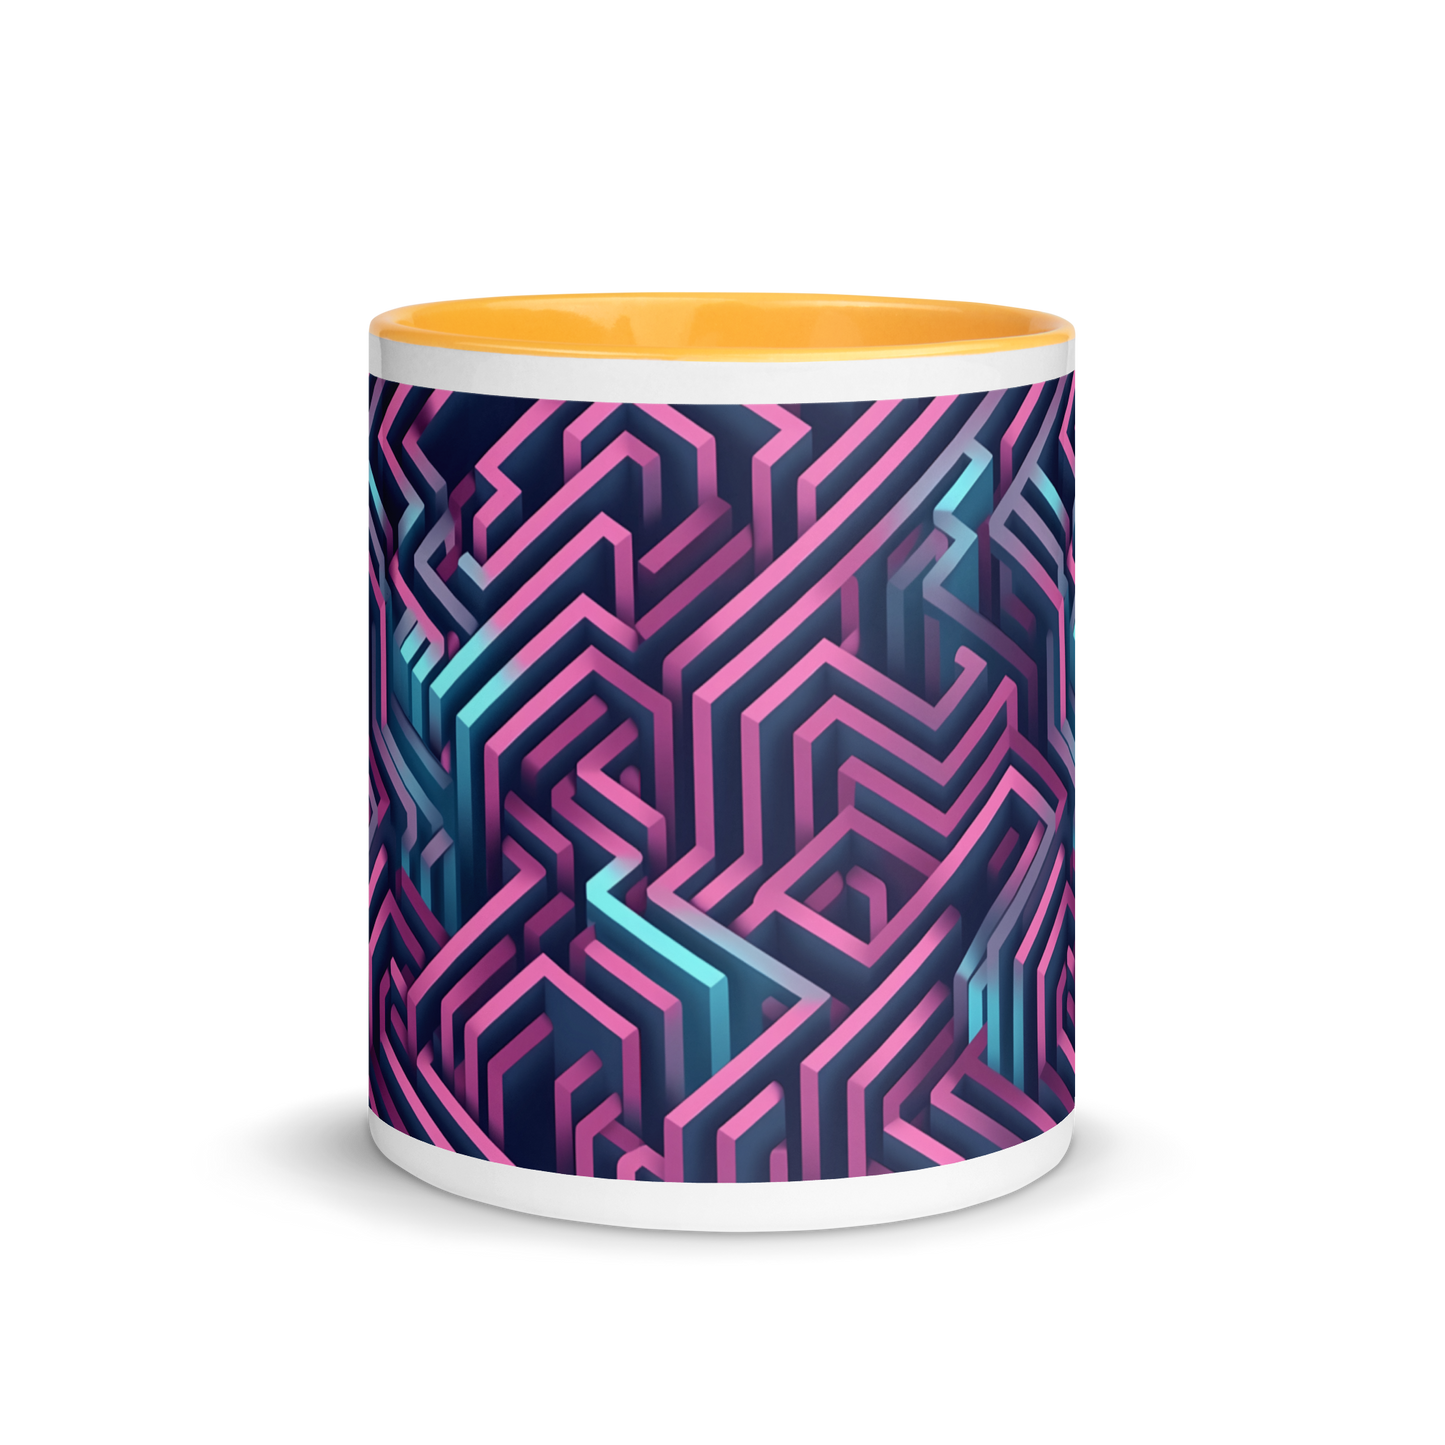 3D Maze Illusion | 3D Patterns | White Ceramic Mug with Color Inside - #4